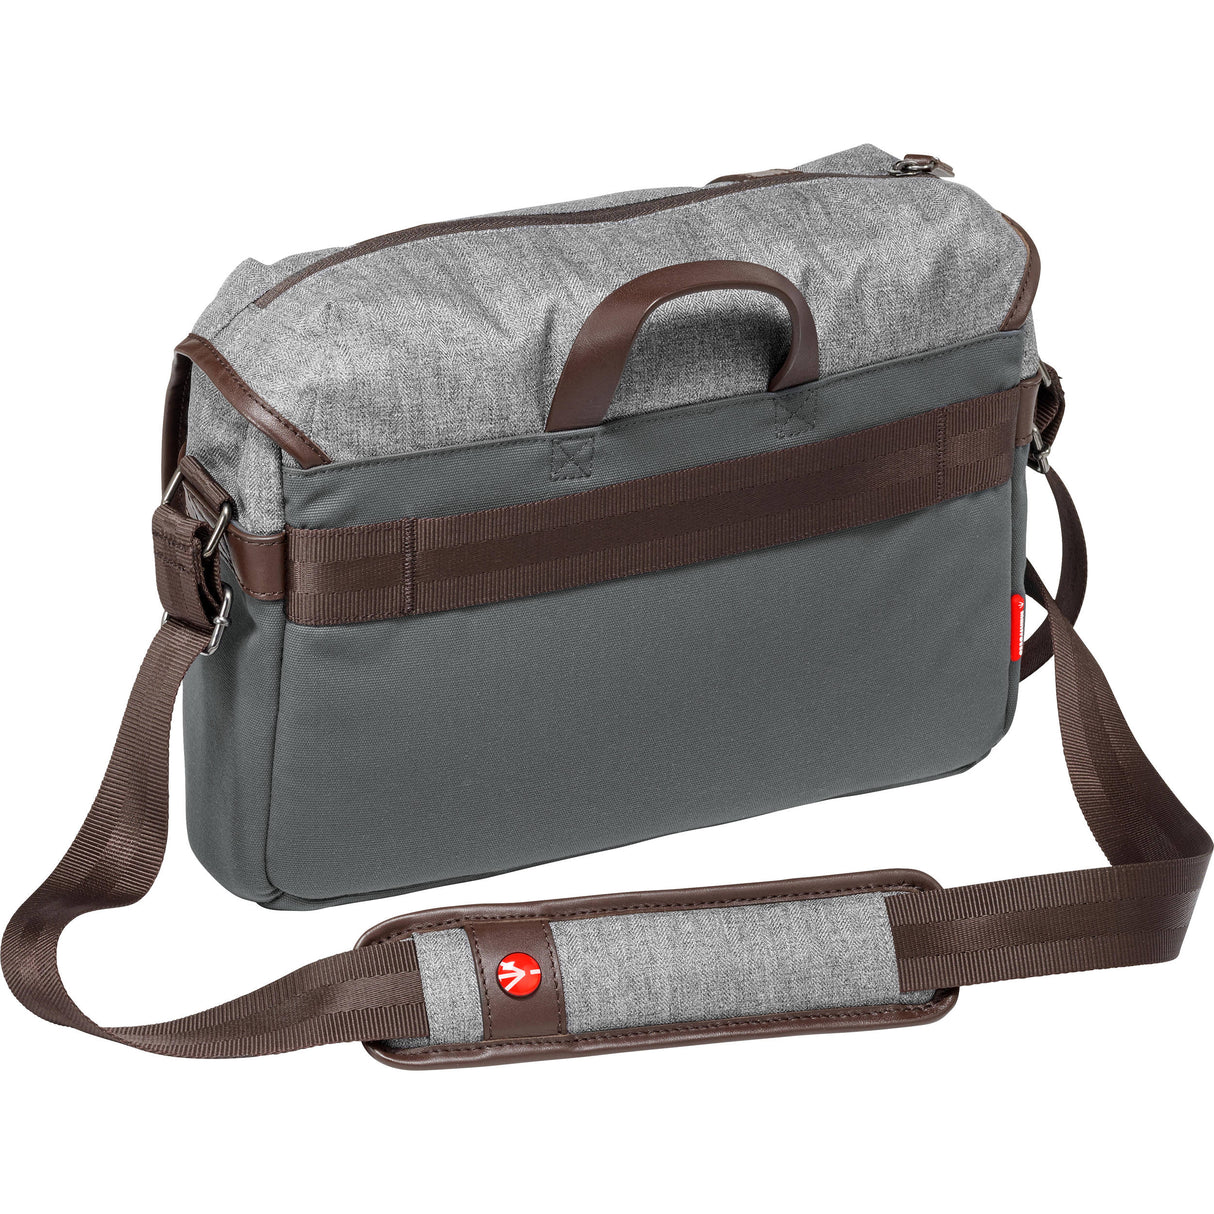 Manfrotto Windsor Camera Messenger Bag (Small, Gray)